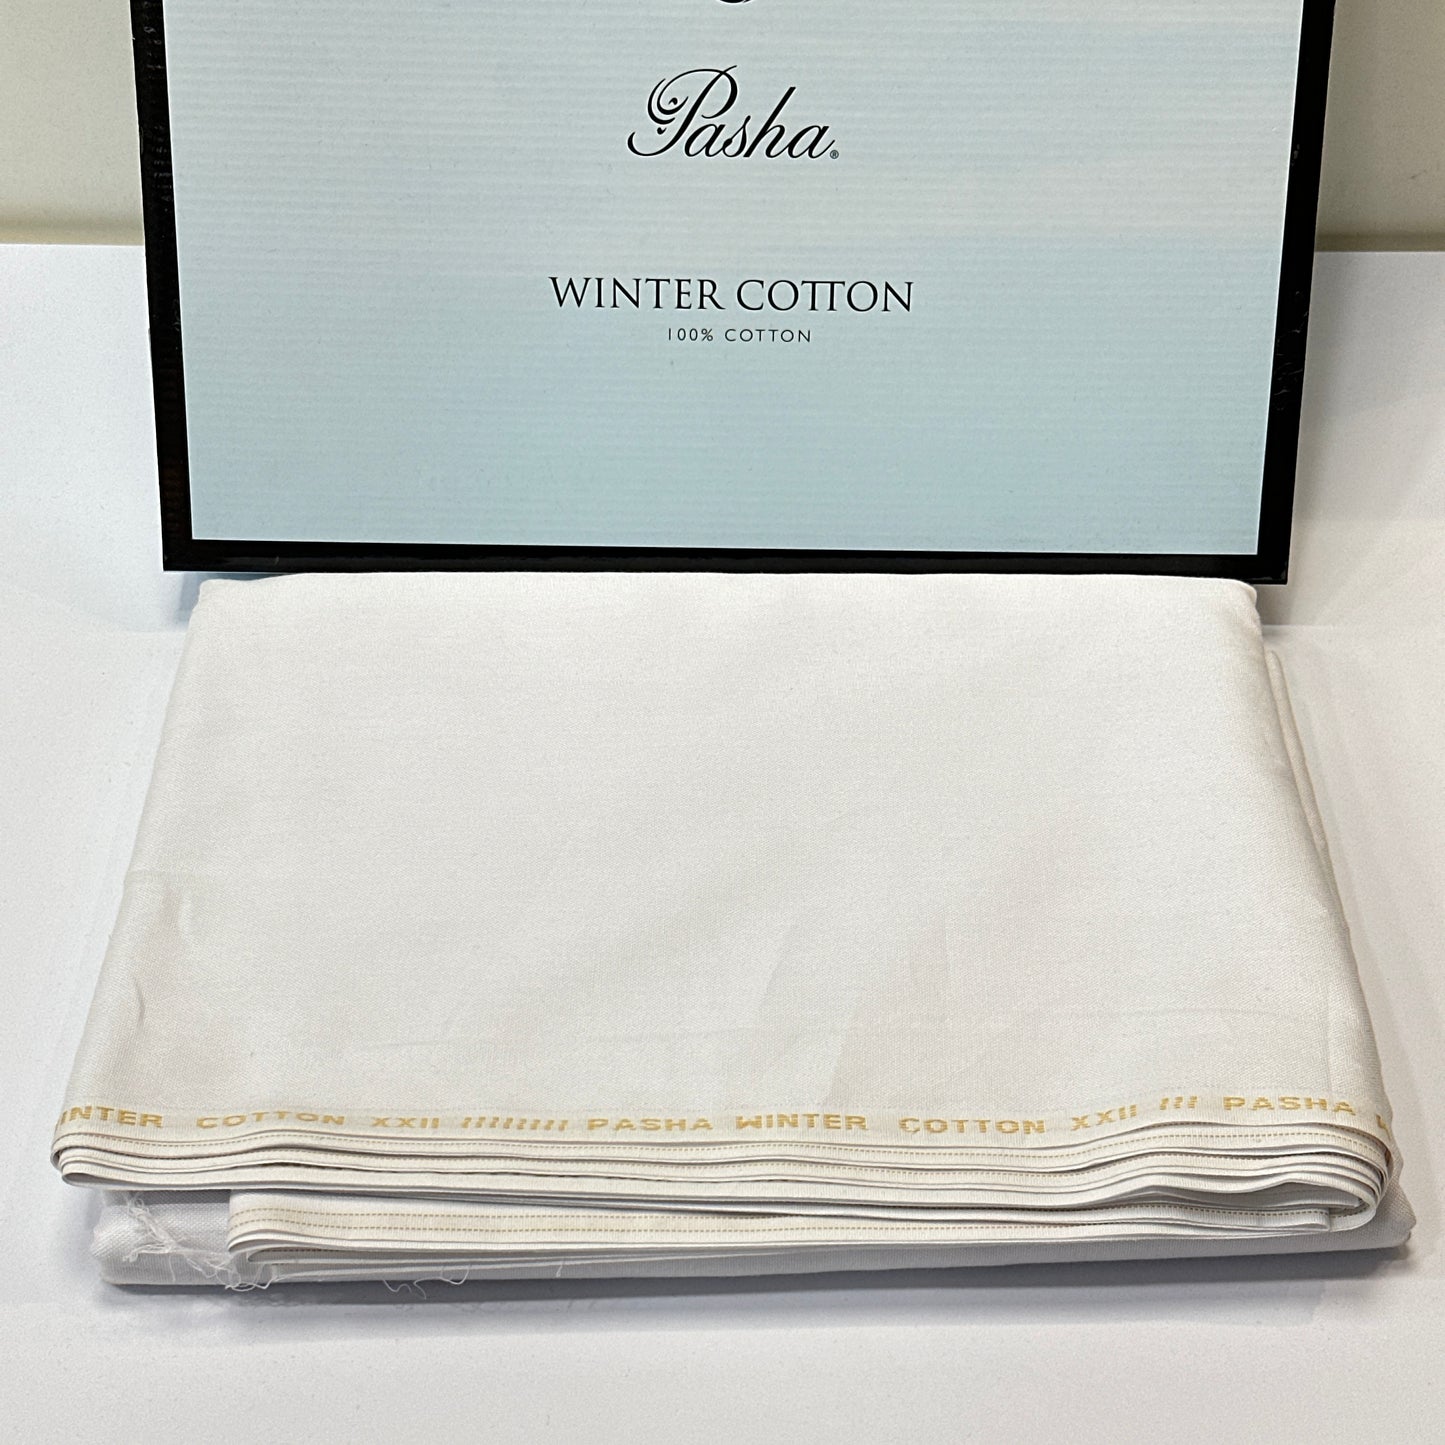 Pasha Winter Cotton